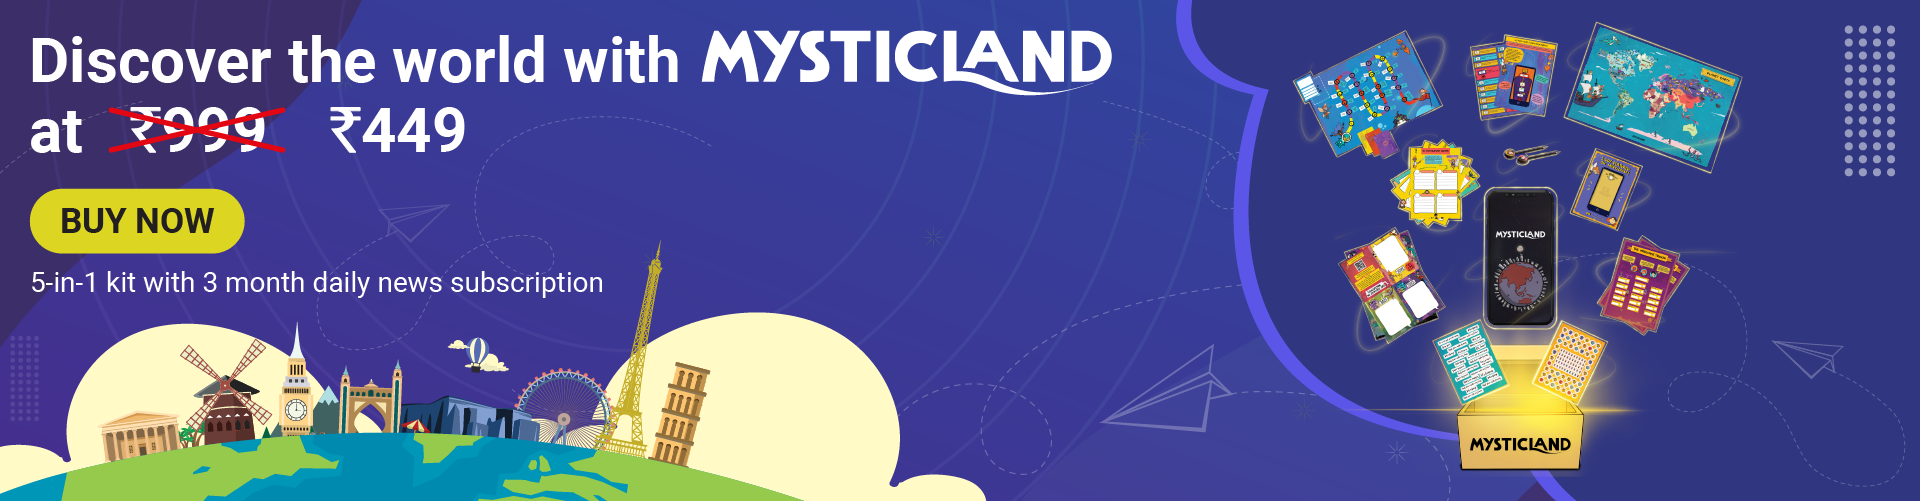 MysticLand World Discovery Kit